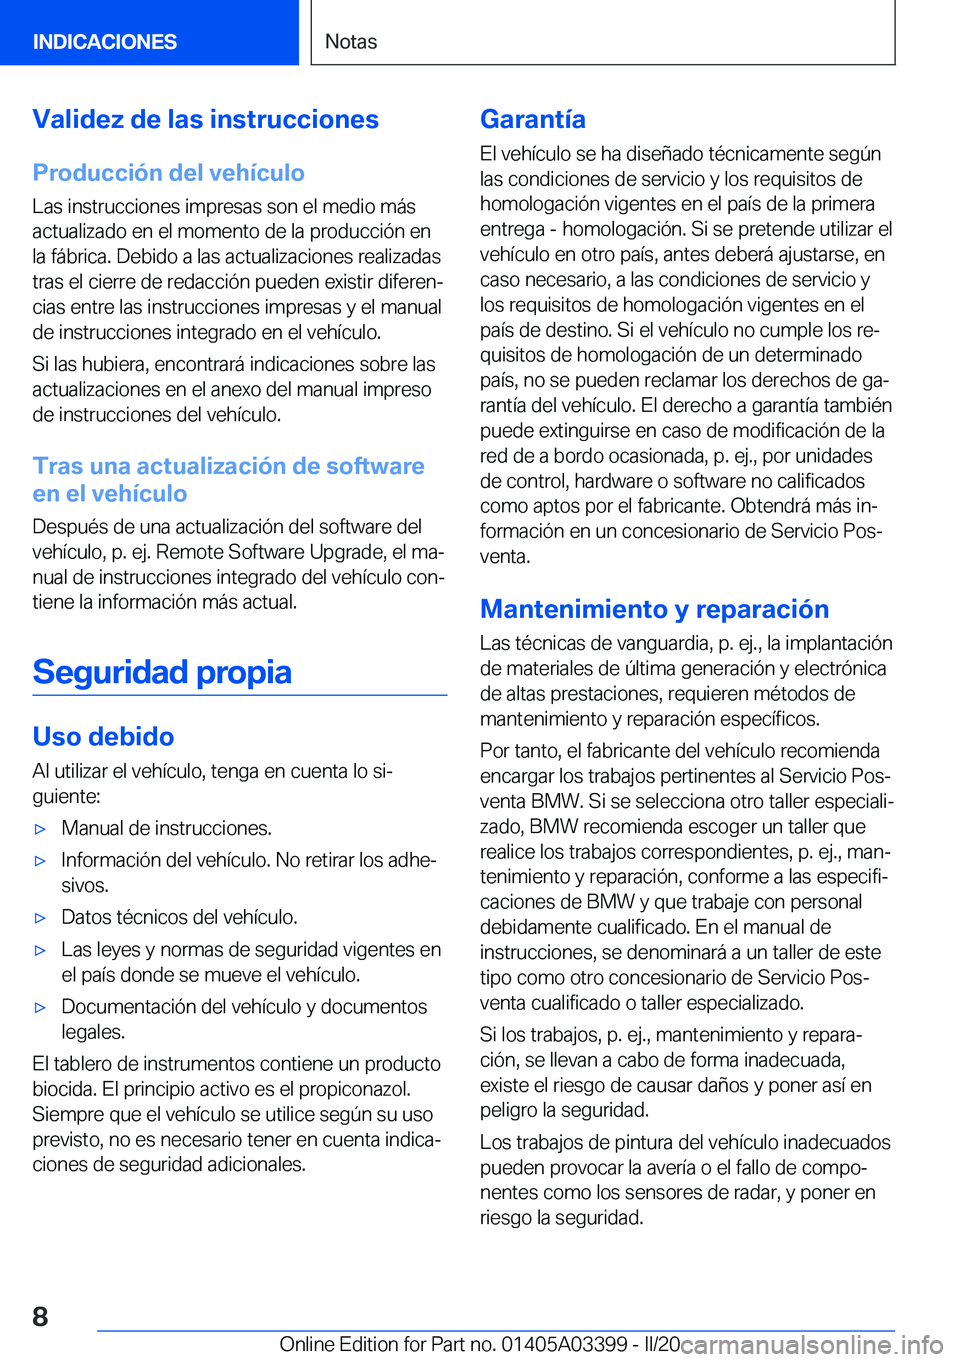 BMW M8 GRAN COUPE 2020  Manuales de Empleo (in Spanish) �V�a�l�i�d�e�z��d�e��l�a�s��i�n�s�t�r�u�c�c�i�o�n�e�s�P�r�o�d�u�c�c�i�